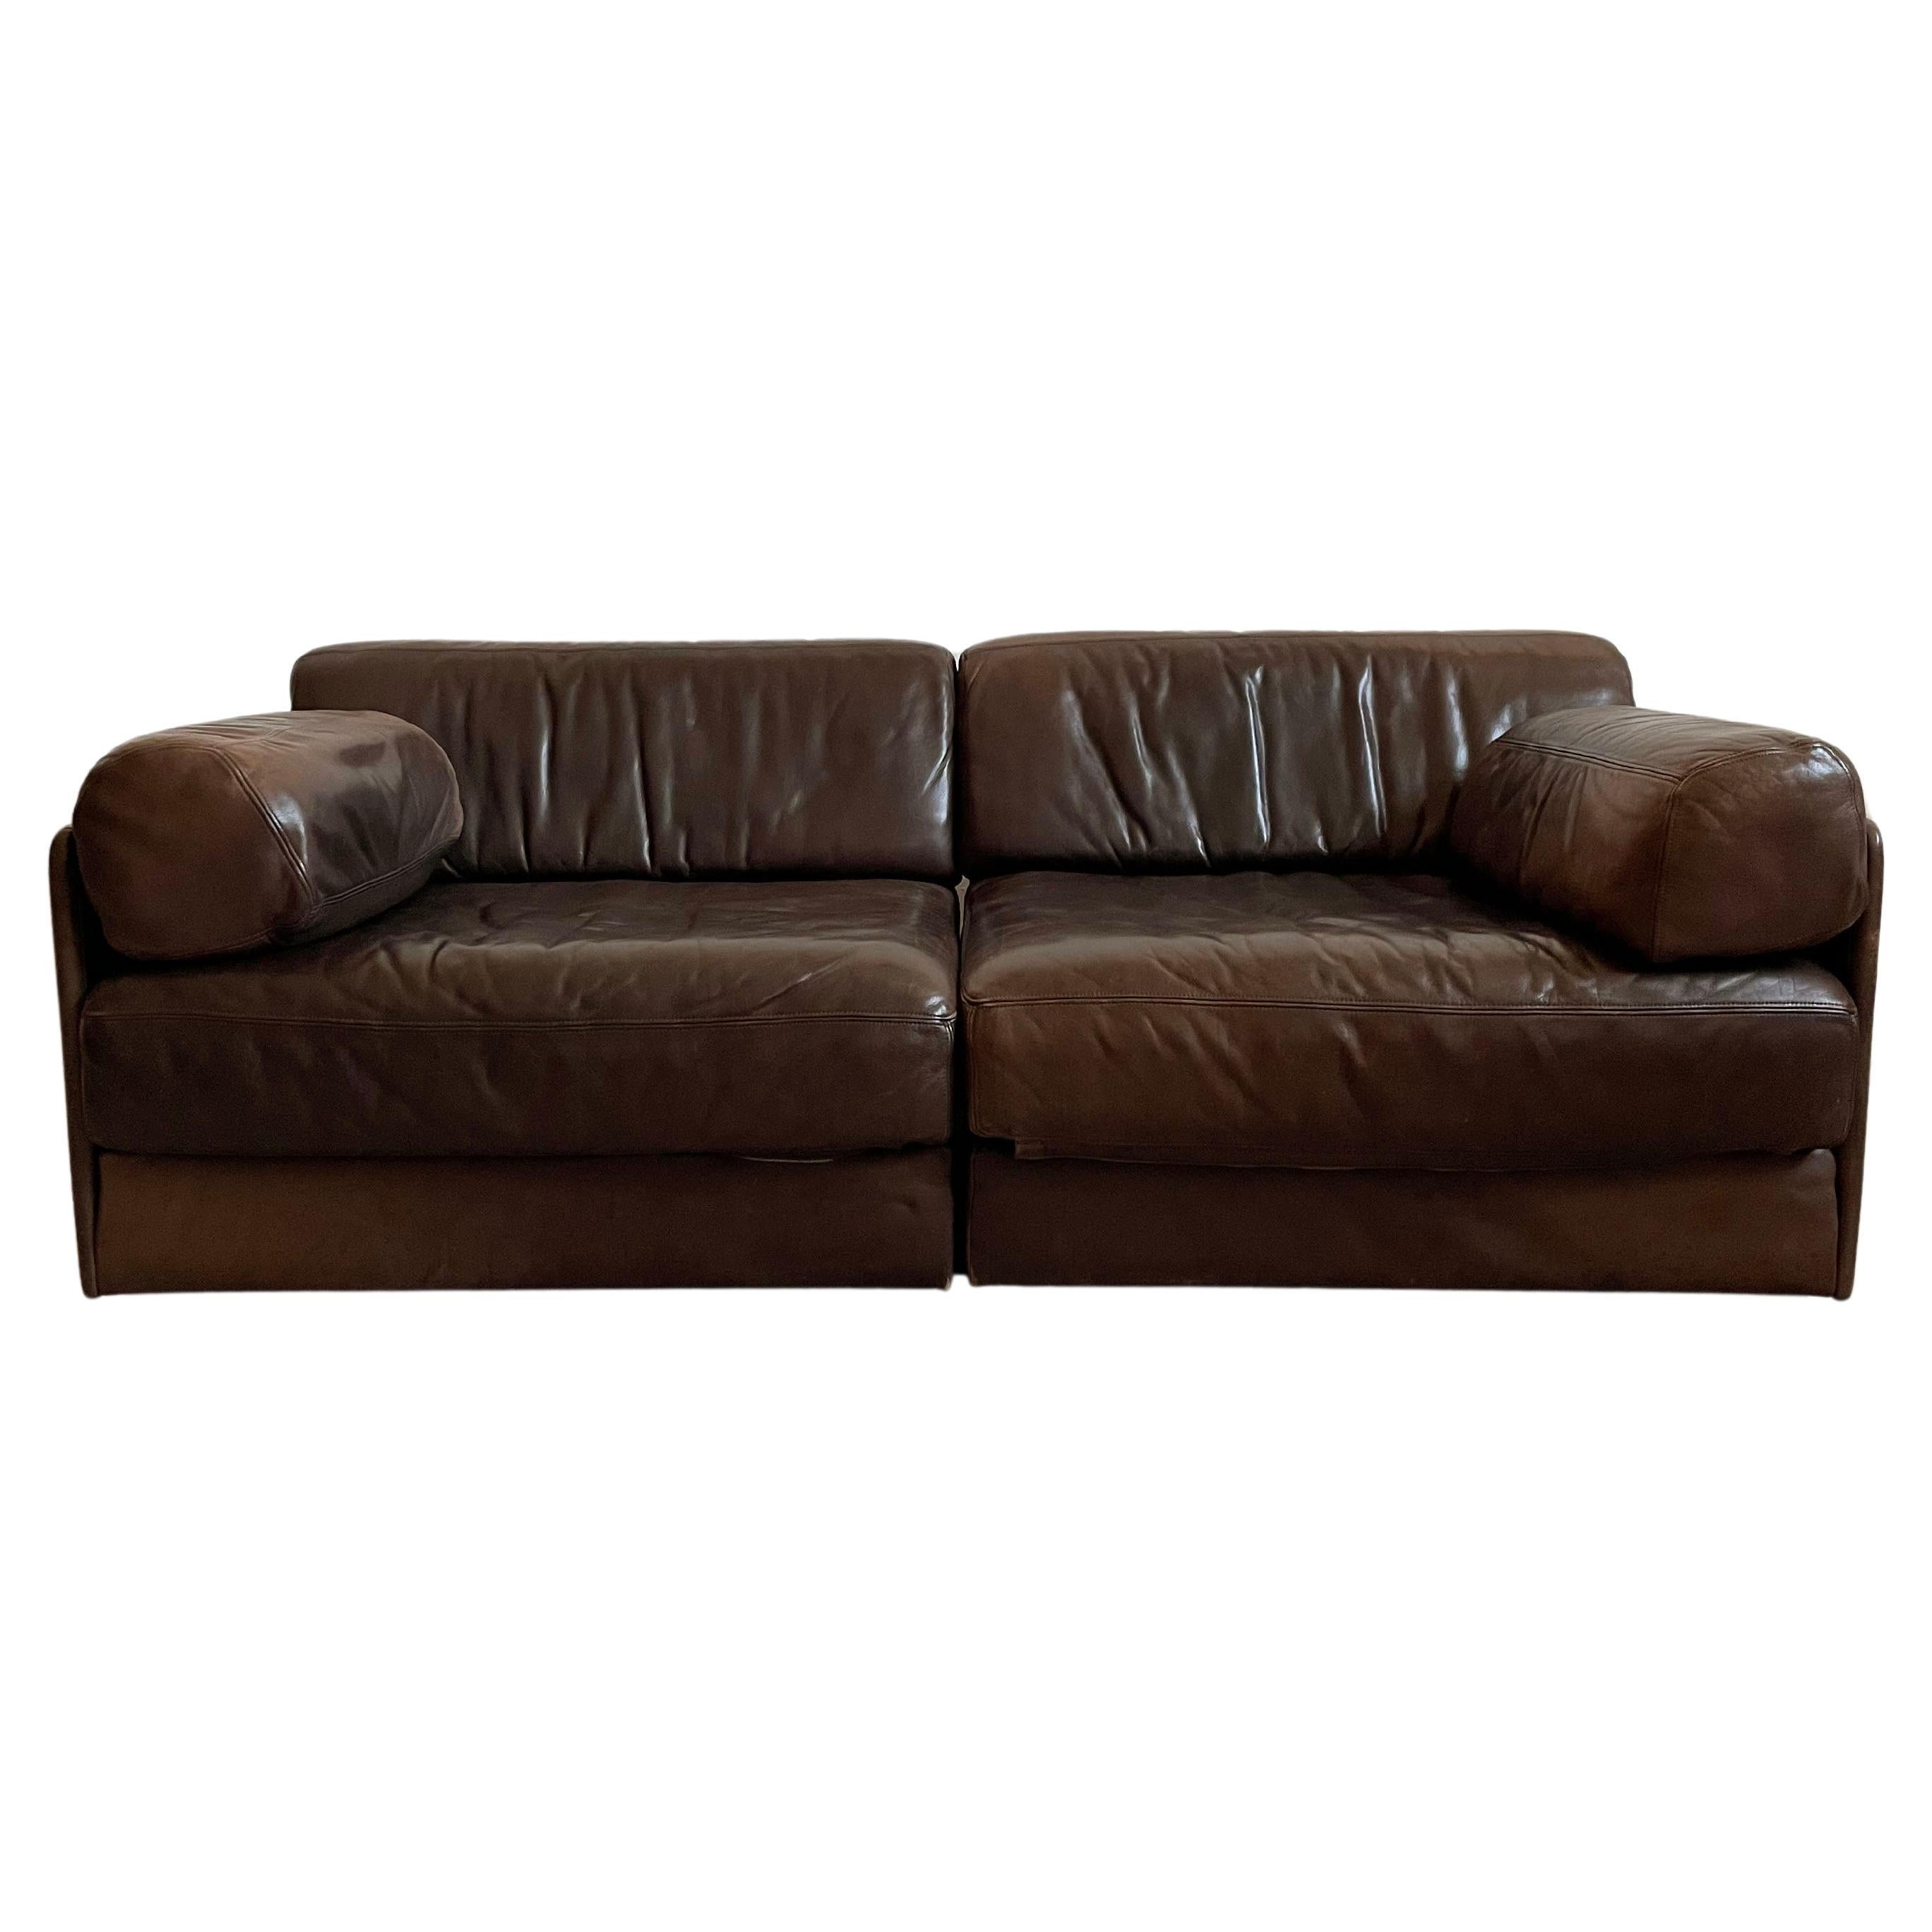 Mid-Century De Sede Ds 76 Modular Sofa Bed, 2-piece Brown Leather Modules, 1970s For Sale